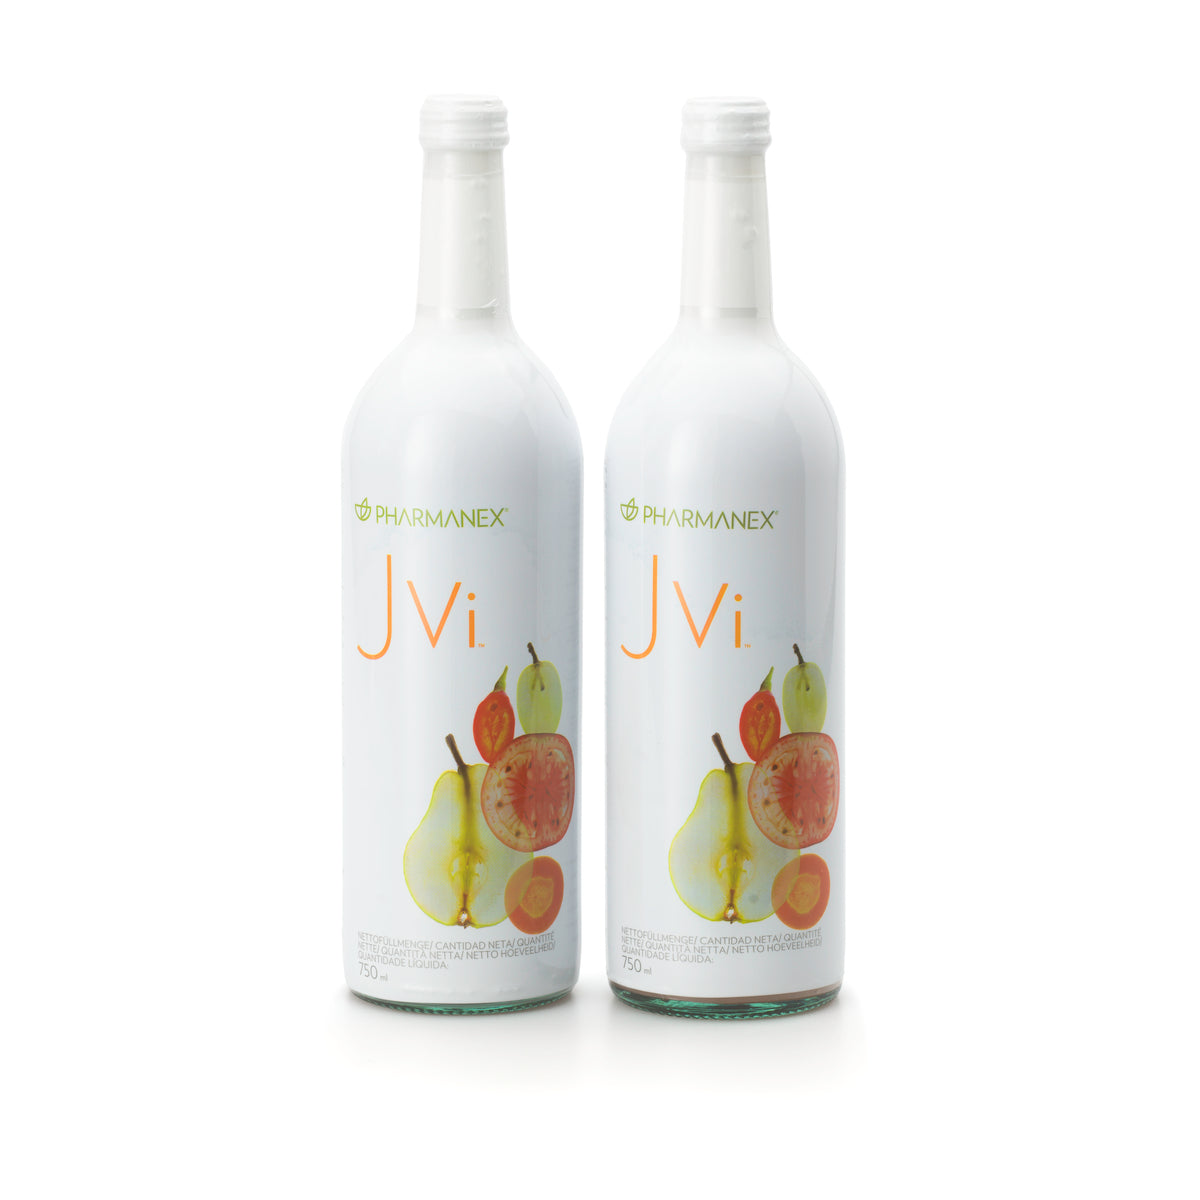 JVi - Vitamin drink from Nu Skin